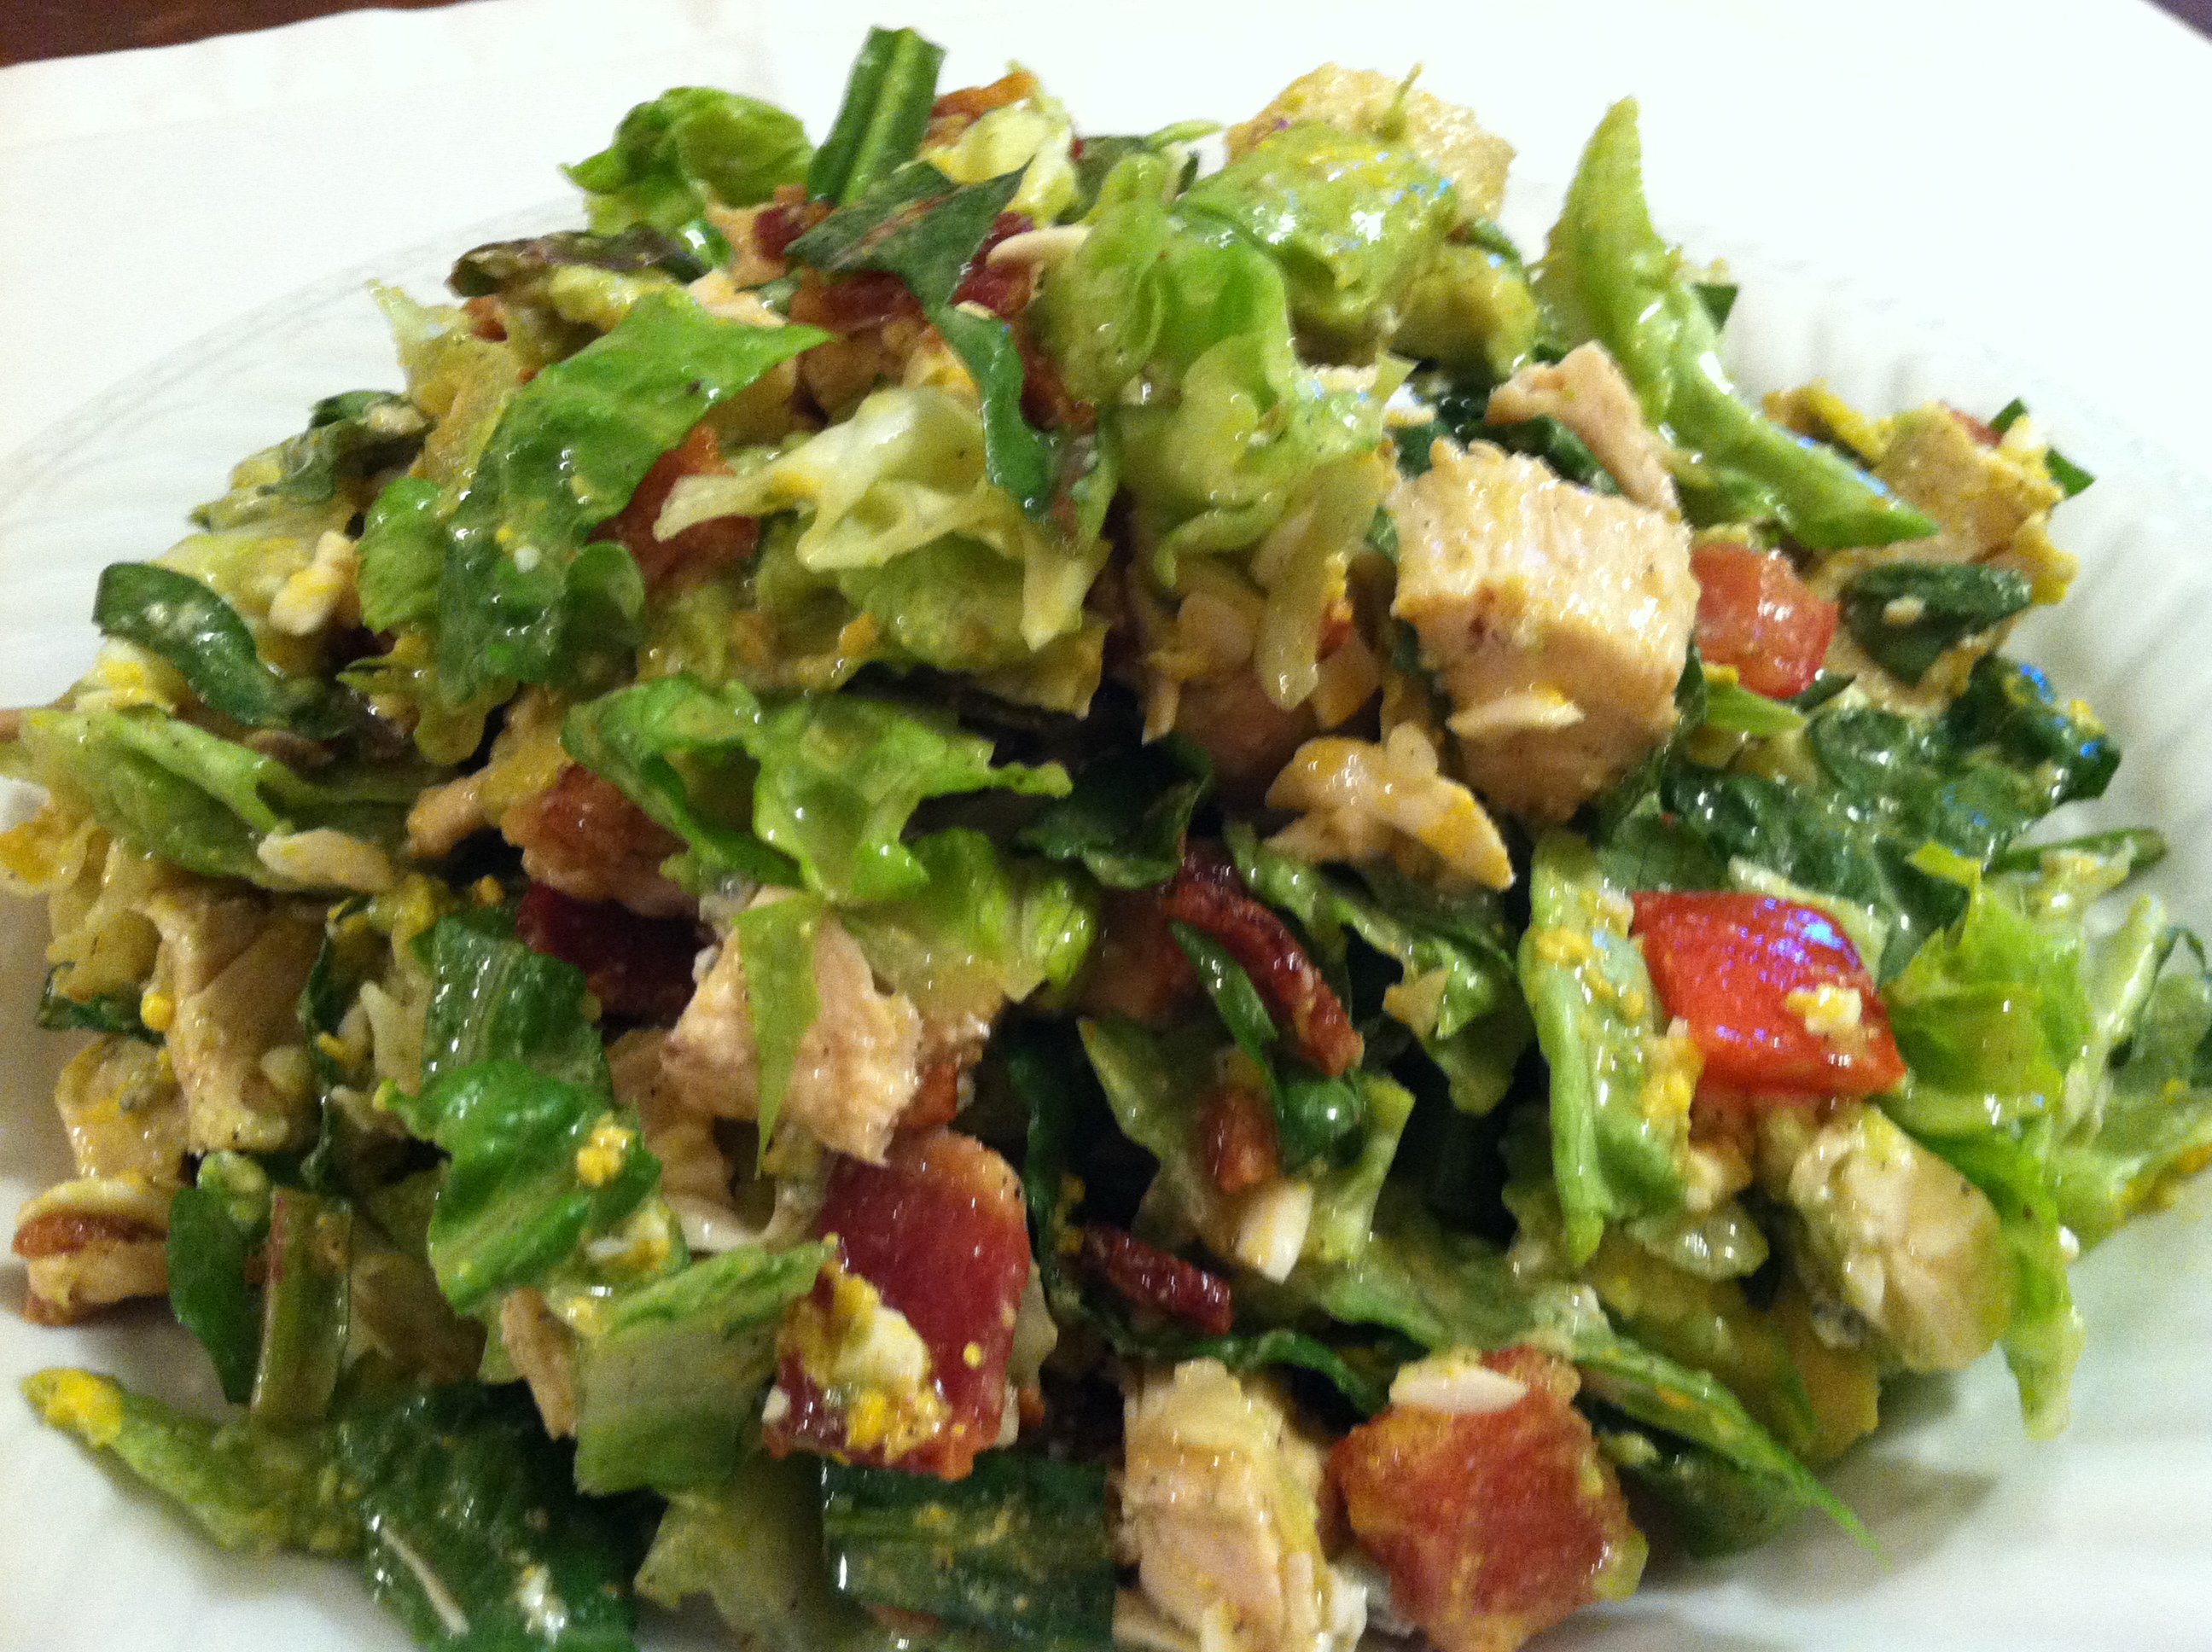 Salad Days – The Cobb Salad | Two Chums